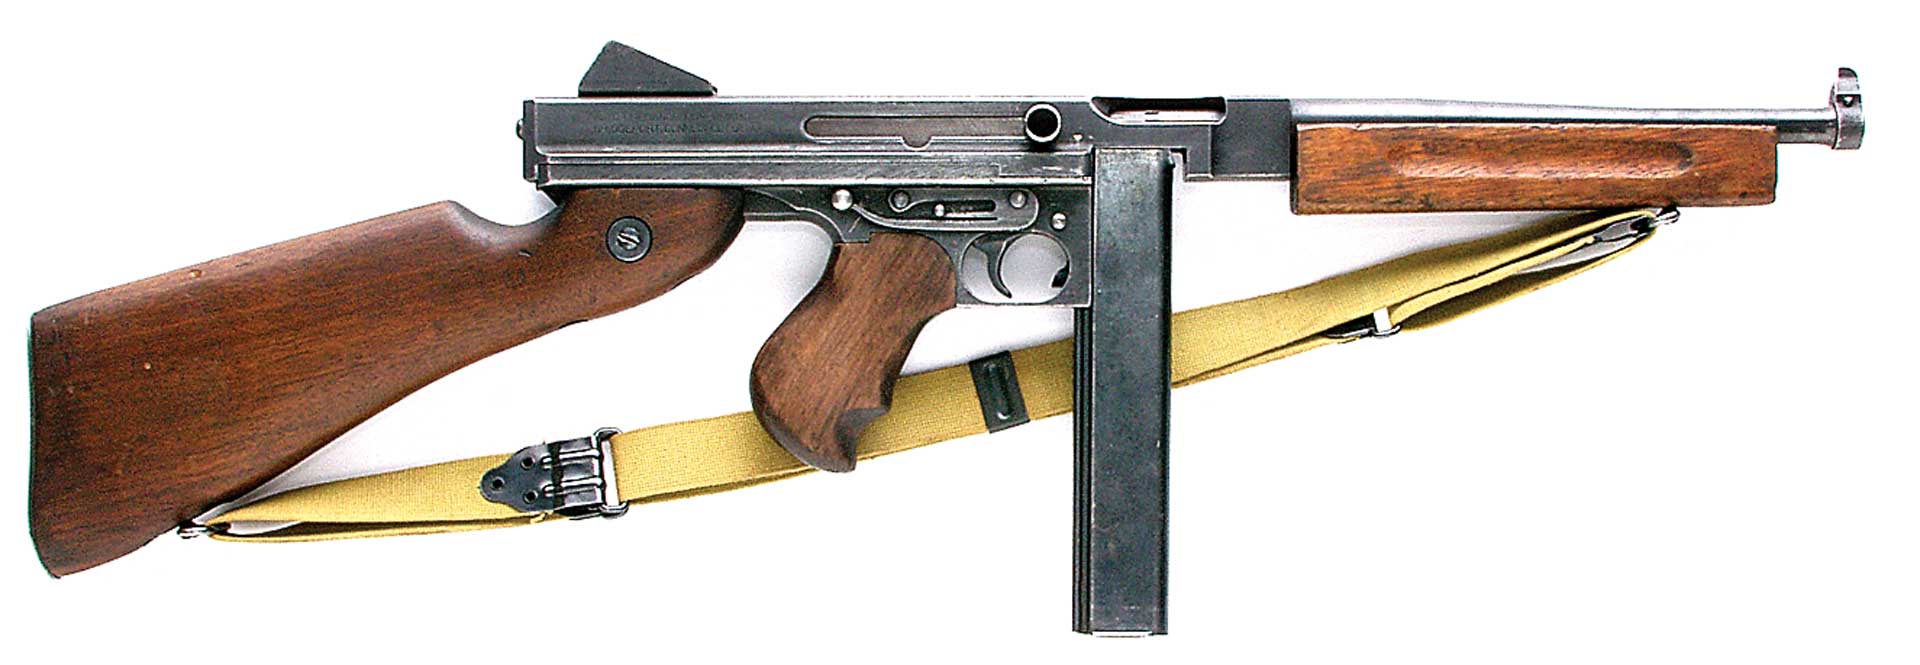 submachine gun thompson tommy gun wood metal